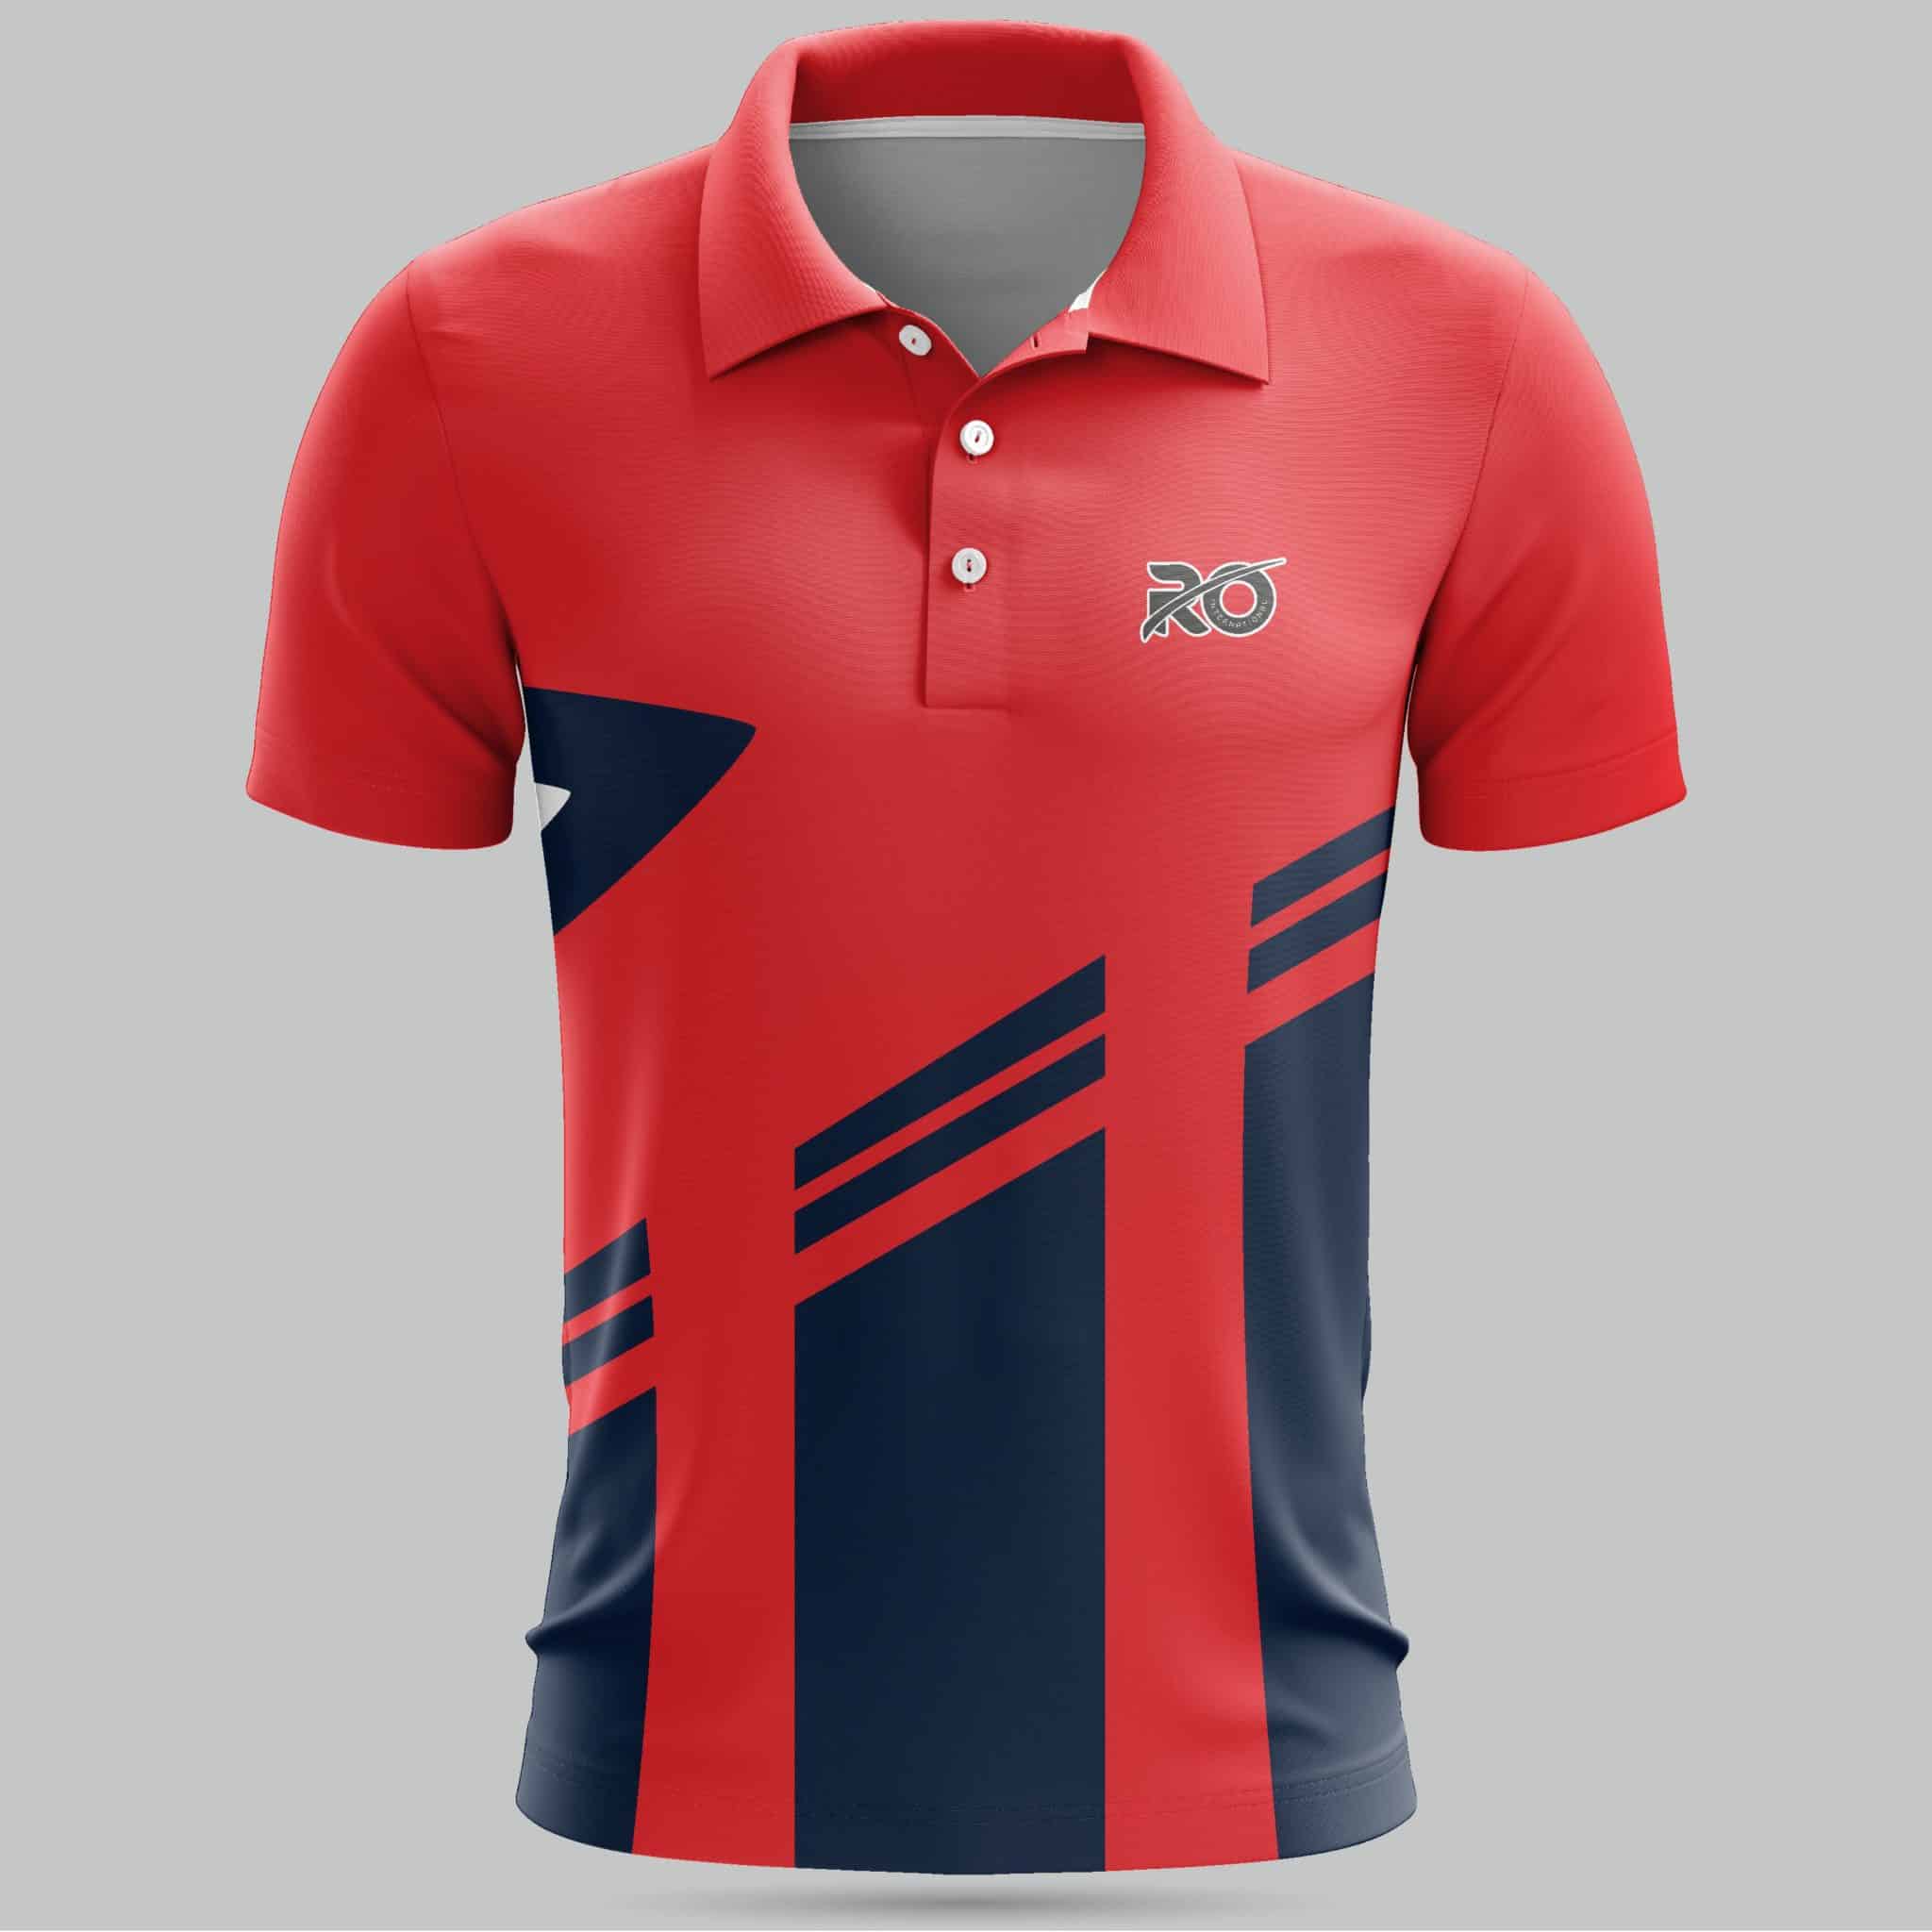 Ro Cricket Jersey Red Navy Blue - RO International